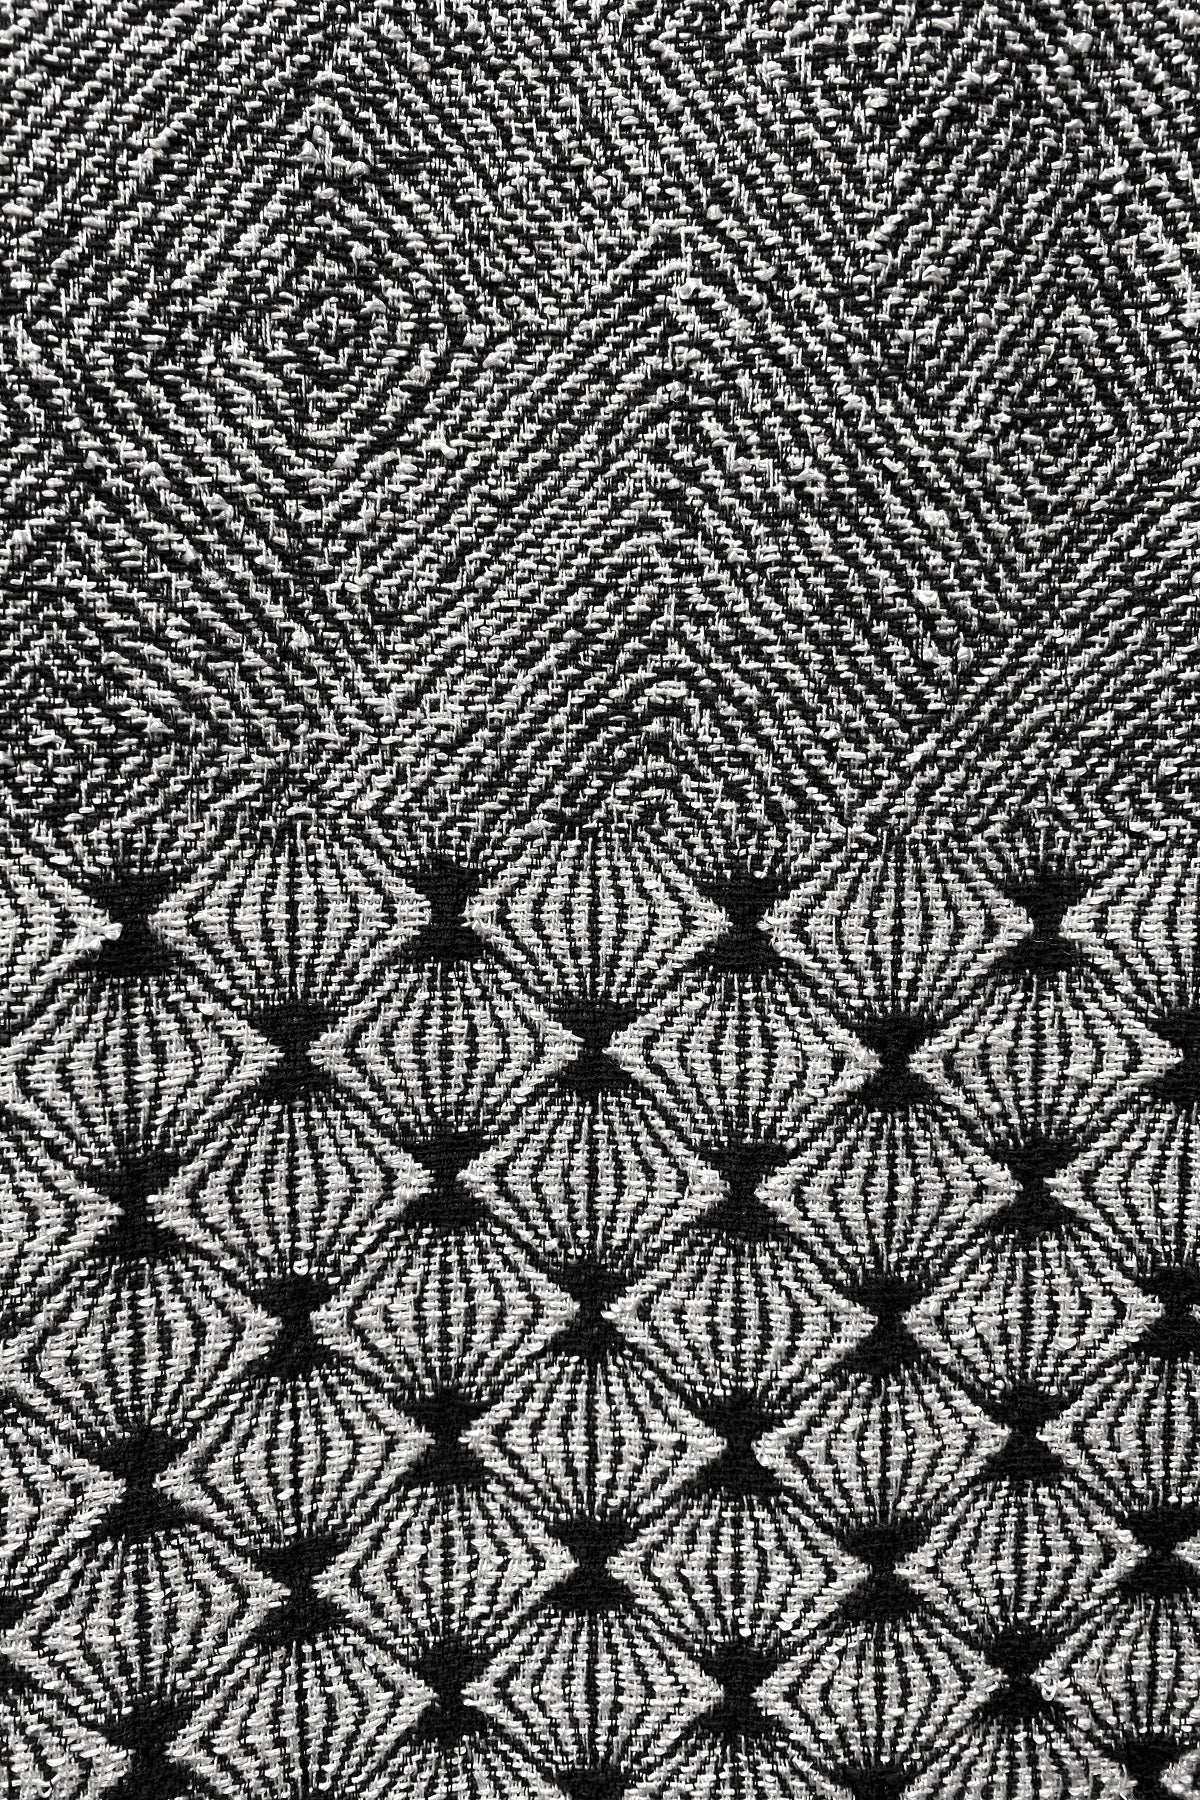 Grey Geometric Knit Tunic Dress